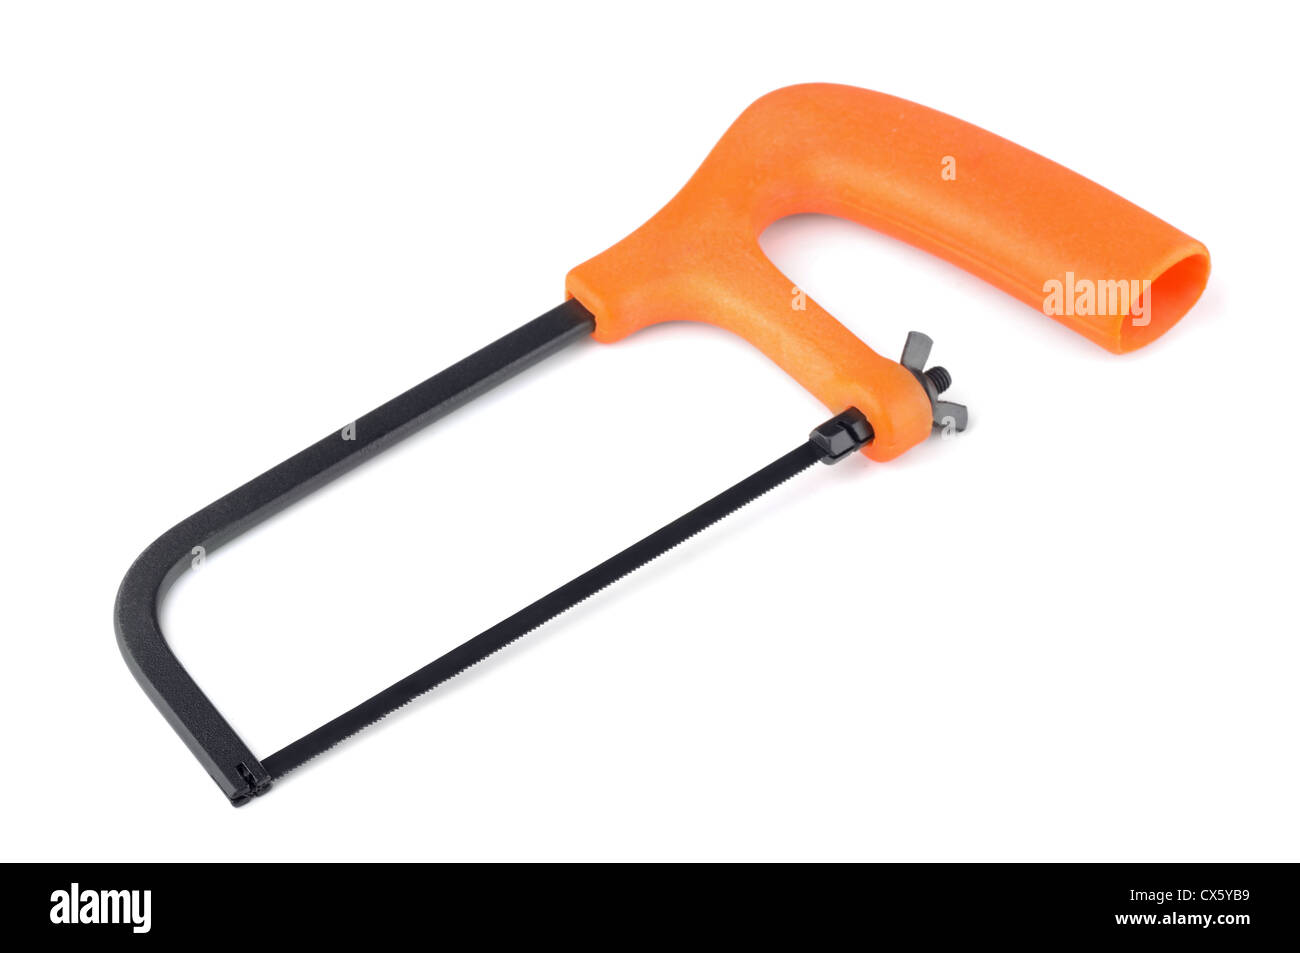 Junior hacksaw with orange plastic handle isolated on white Stock Photo